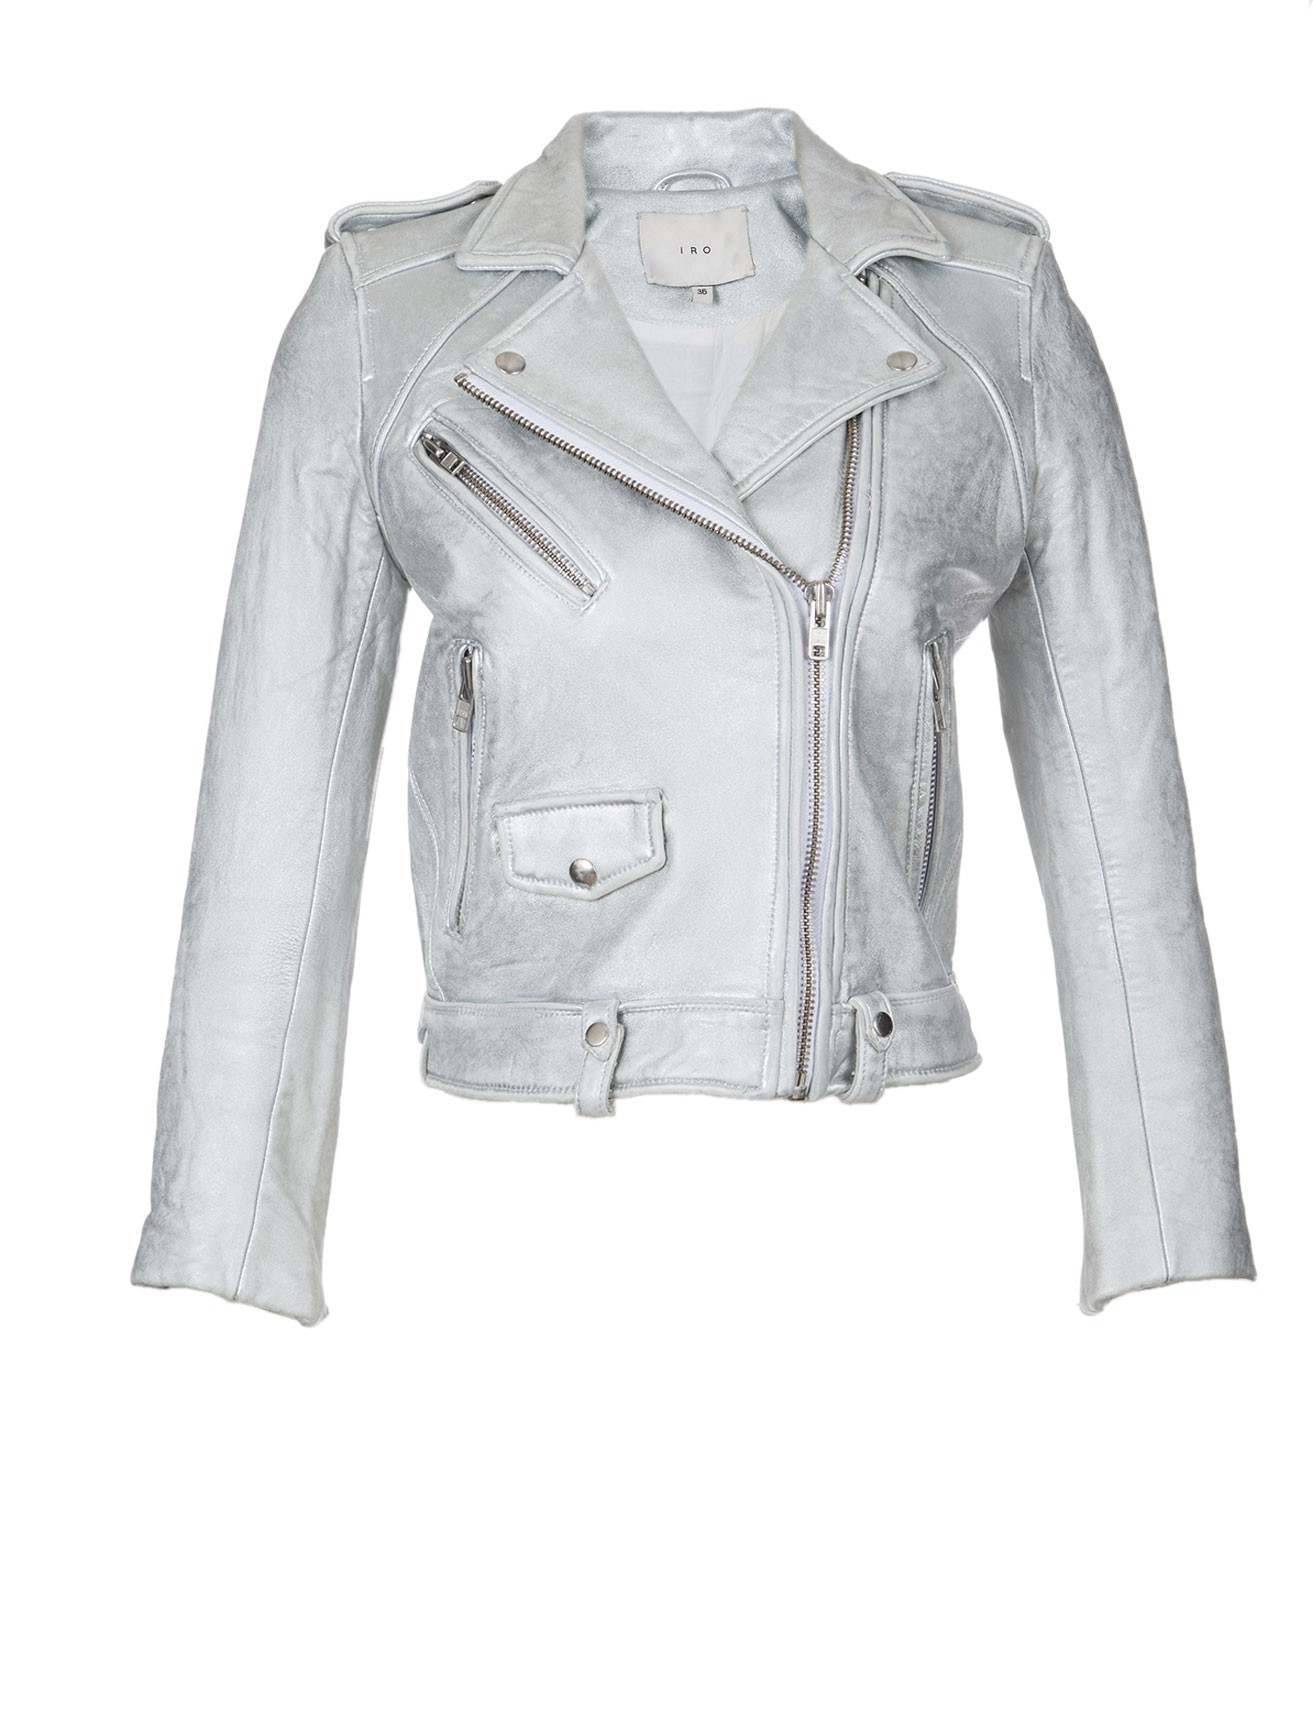 Iro Metallic Leather Moto Jacket in Silver Lyst